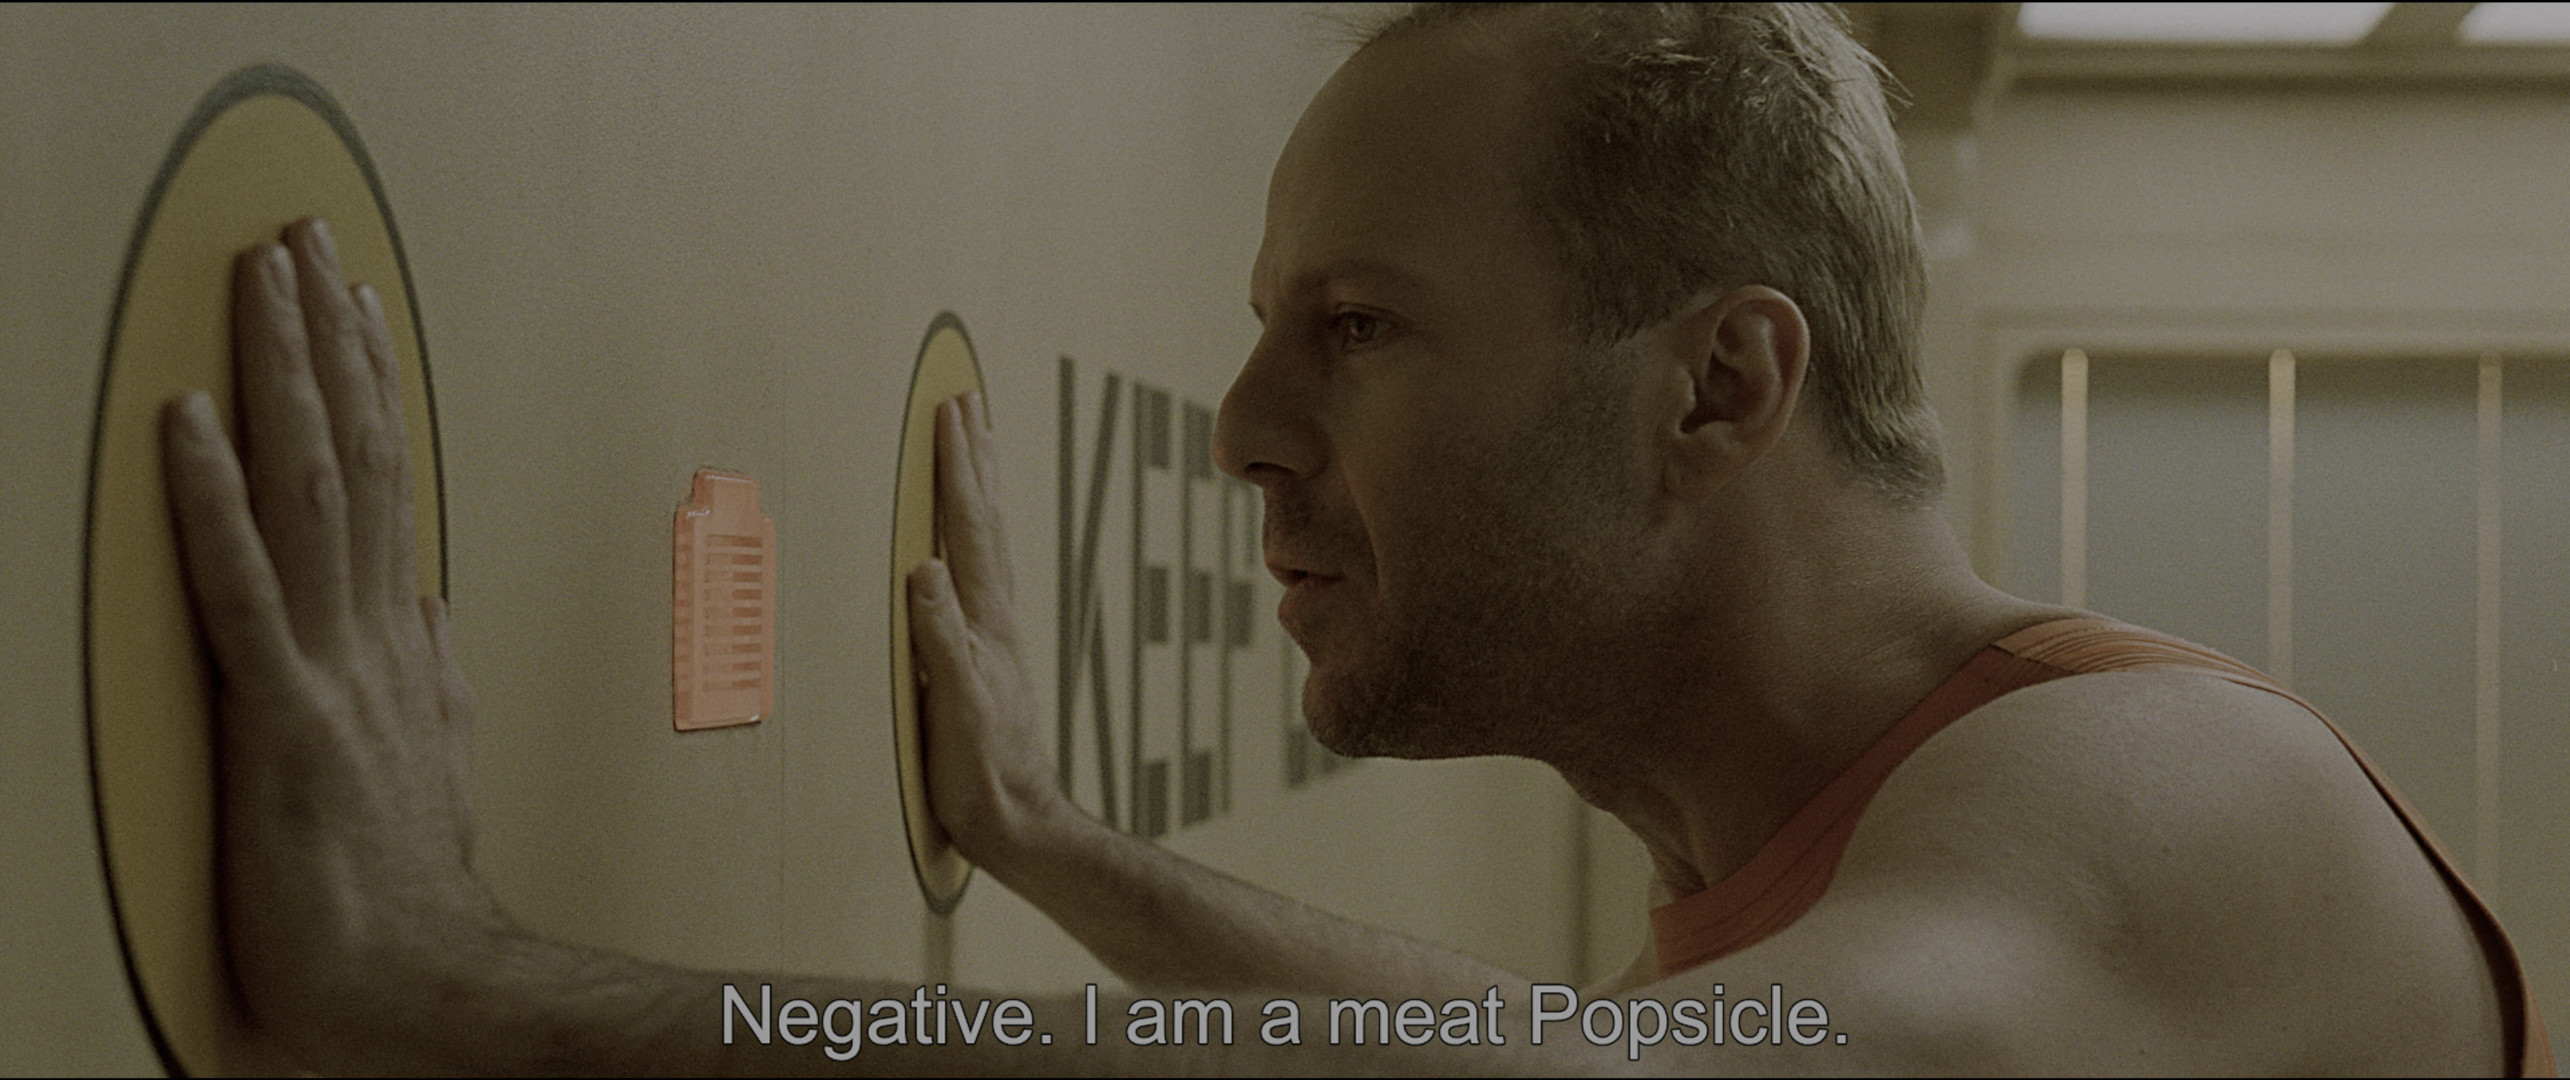 Negative.  I am a meat popsicle.